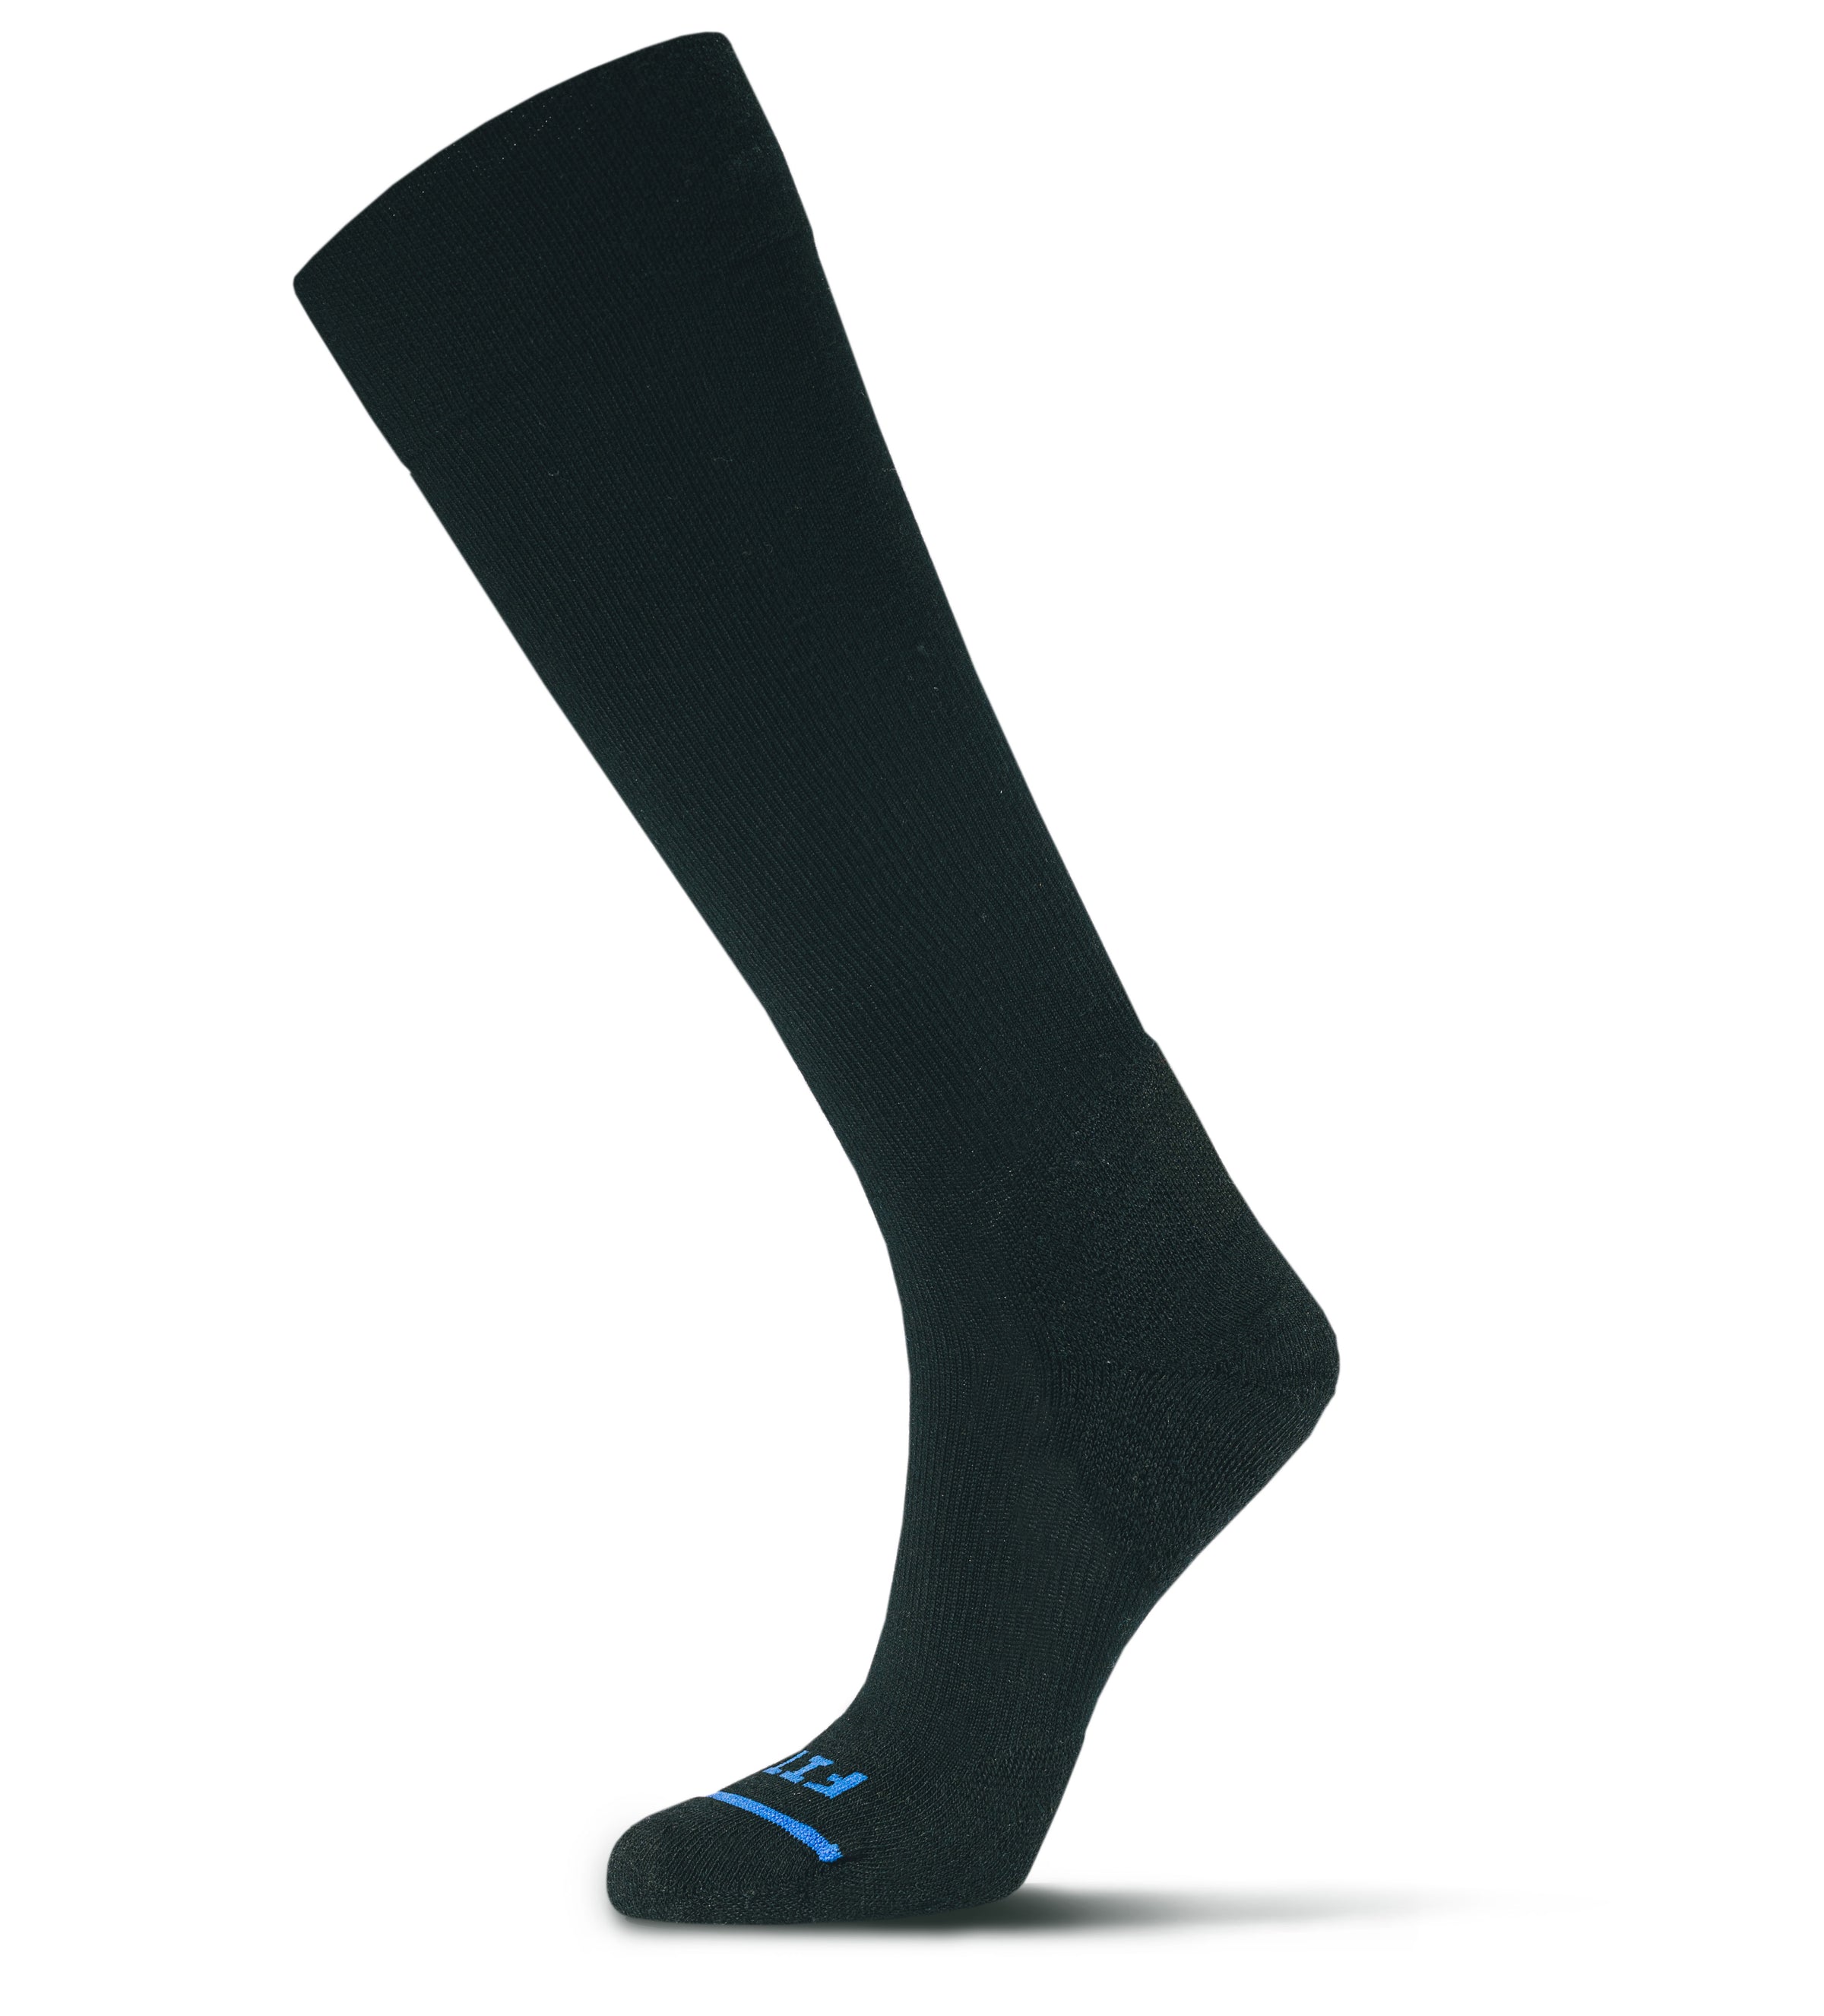 Compression Socks (20-30 mmHg) - Black 2 Pack